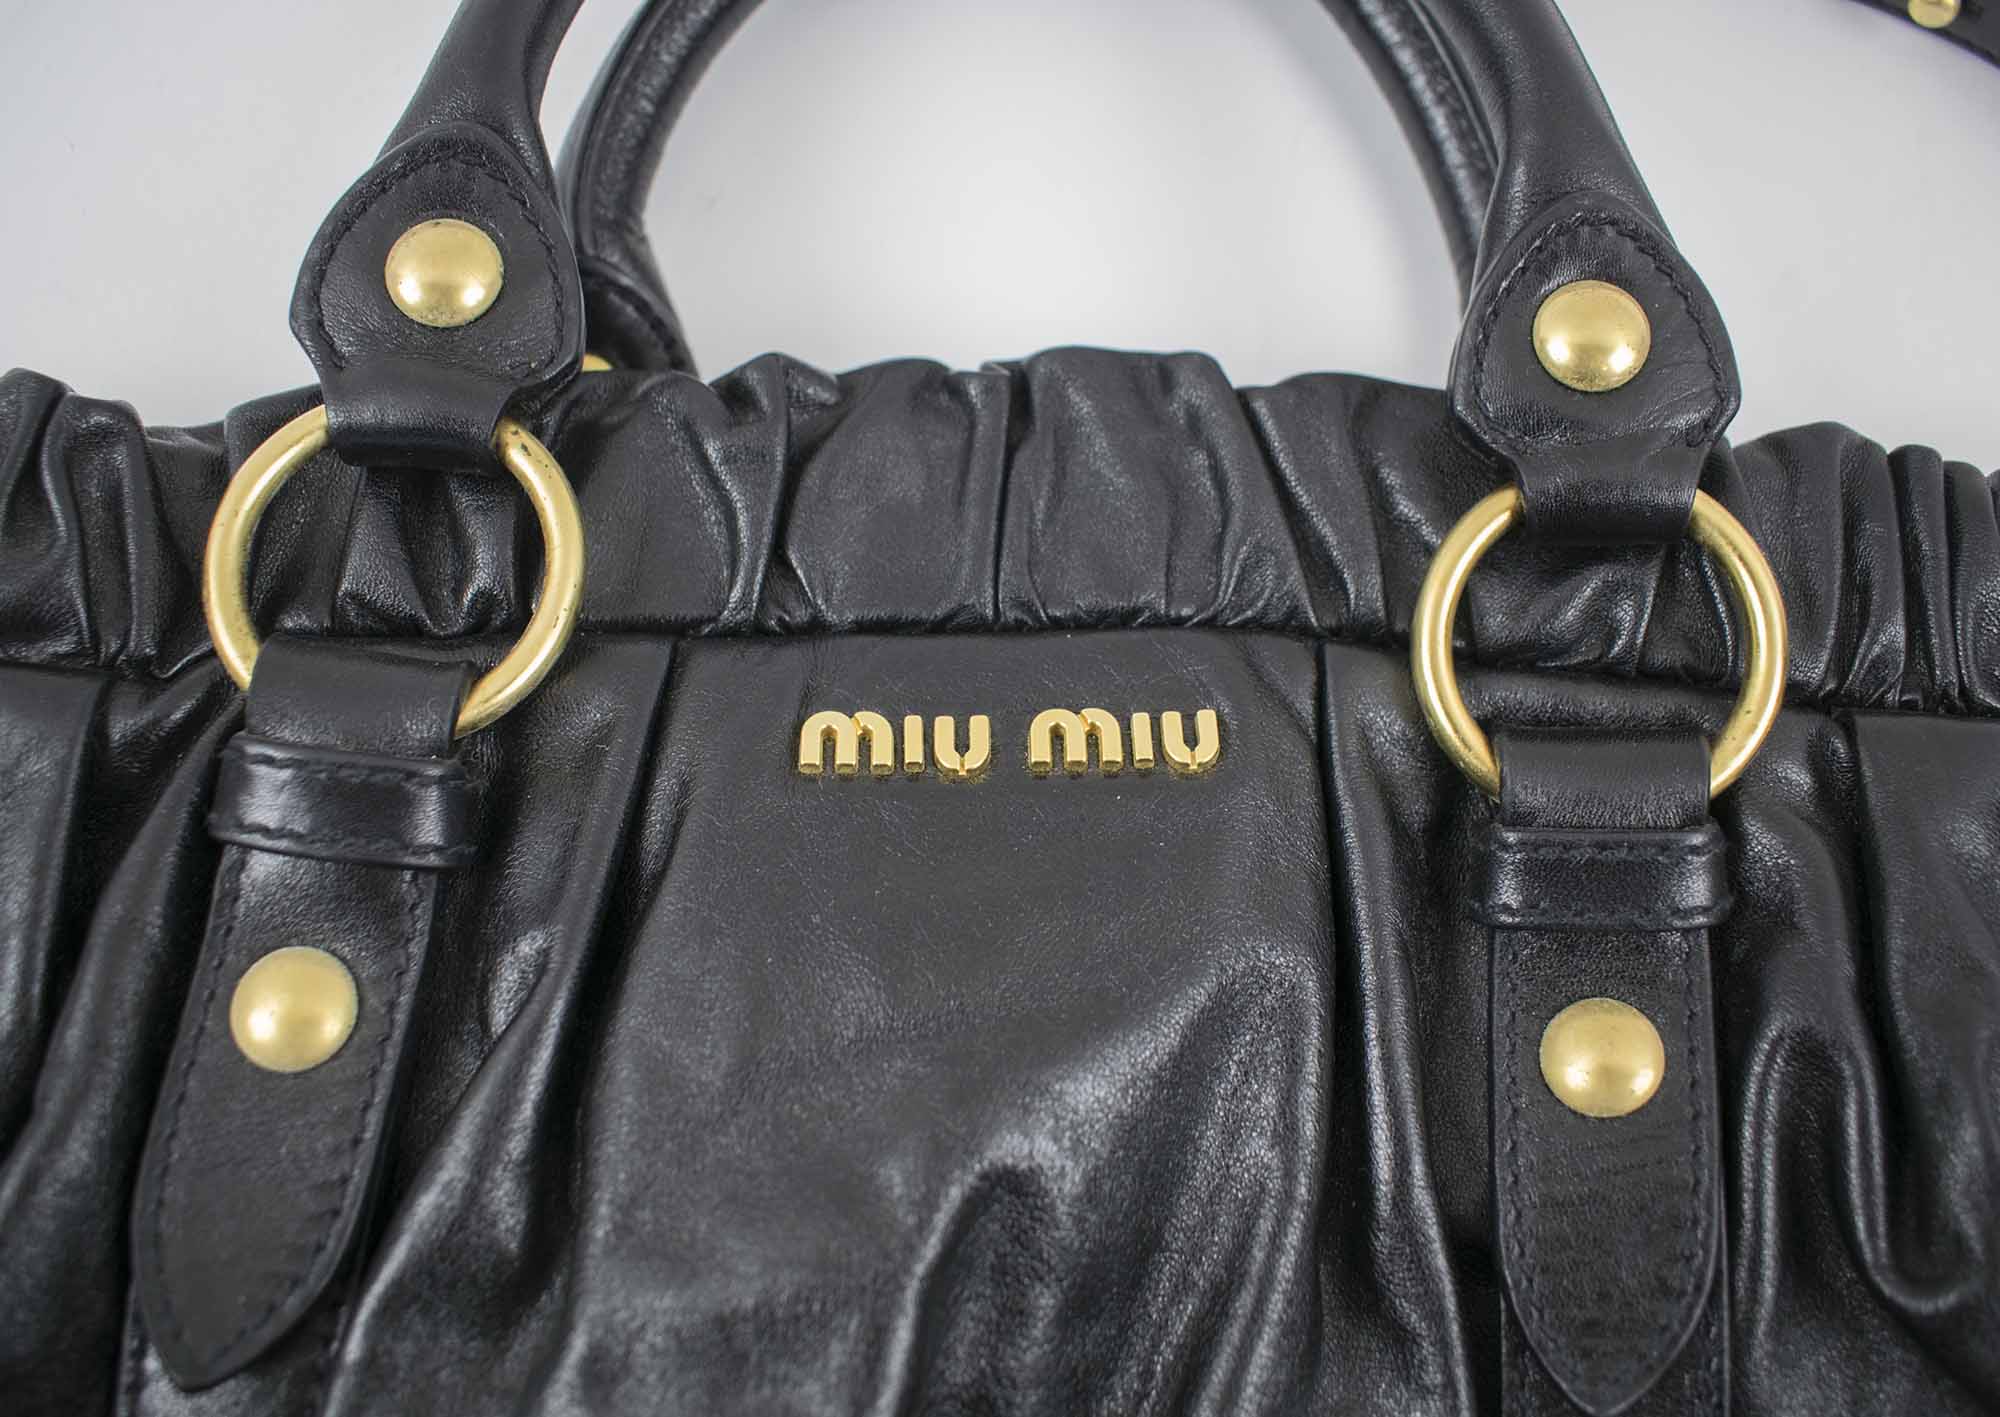 MIU MIU VITELLO LUX GATHERED TOTE BAG, black leather with